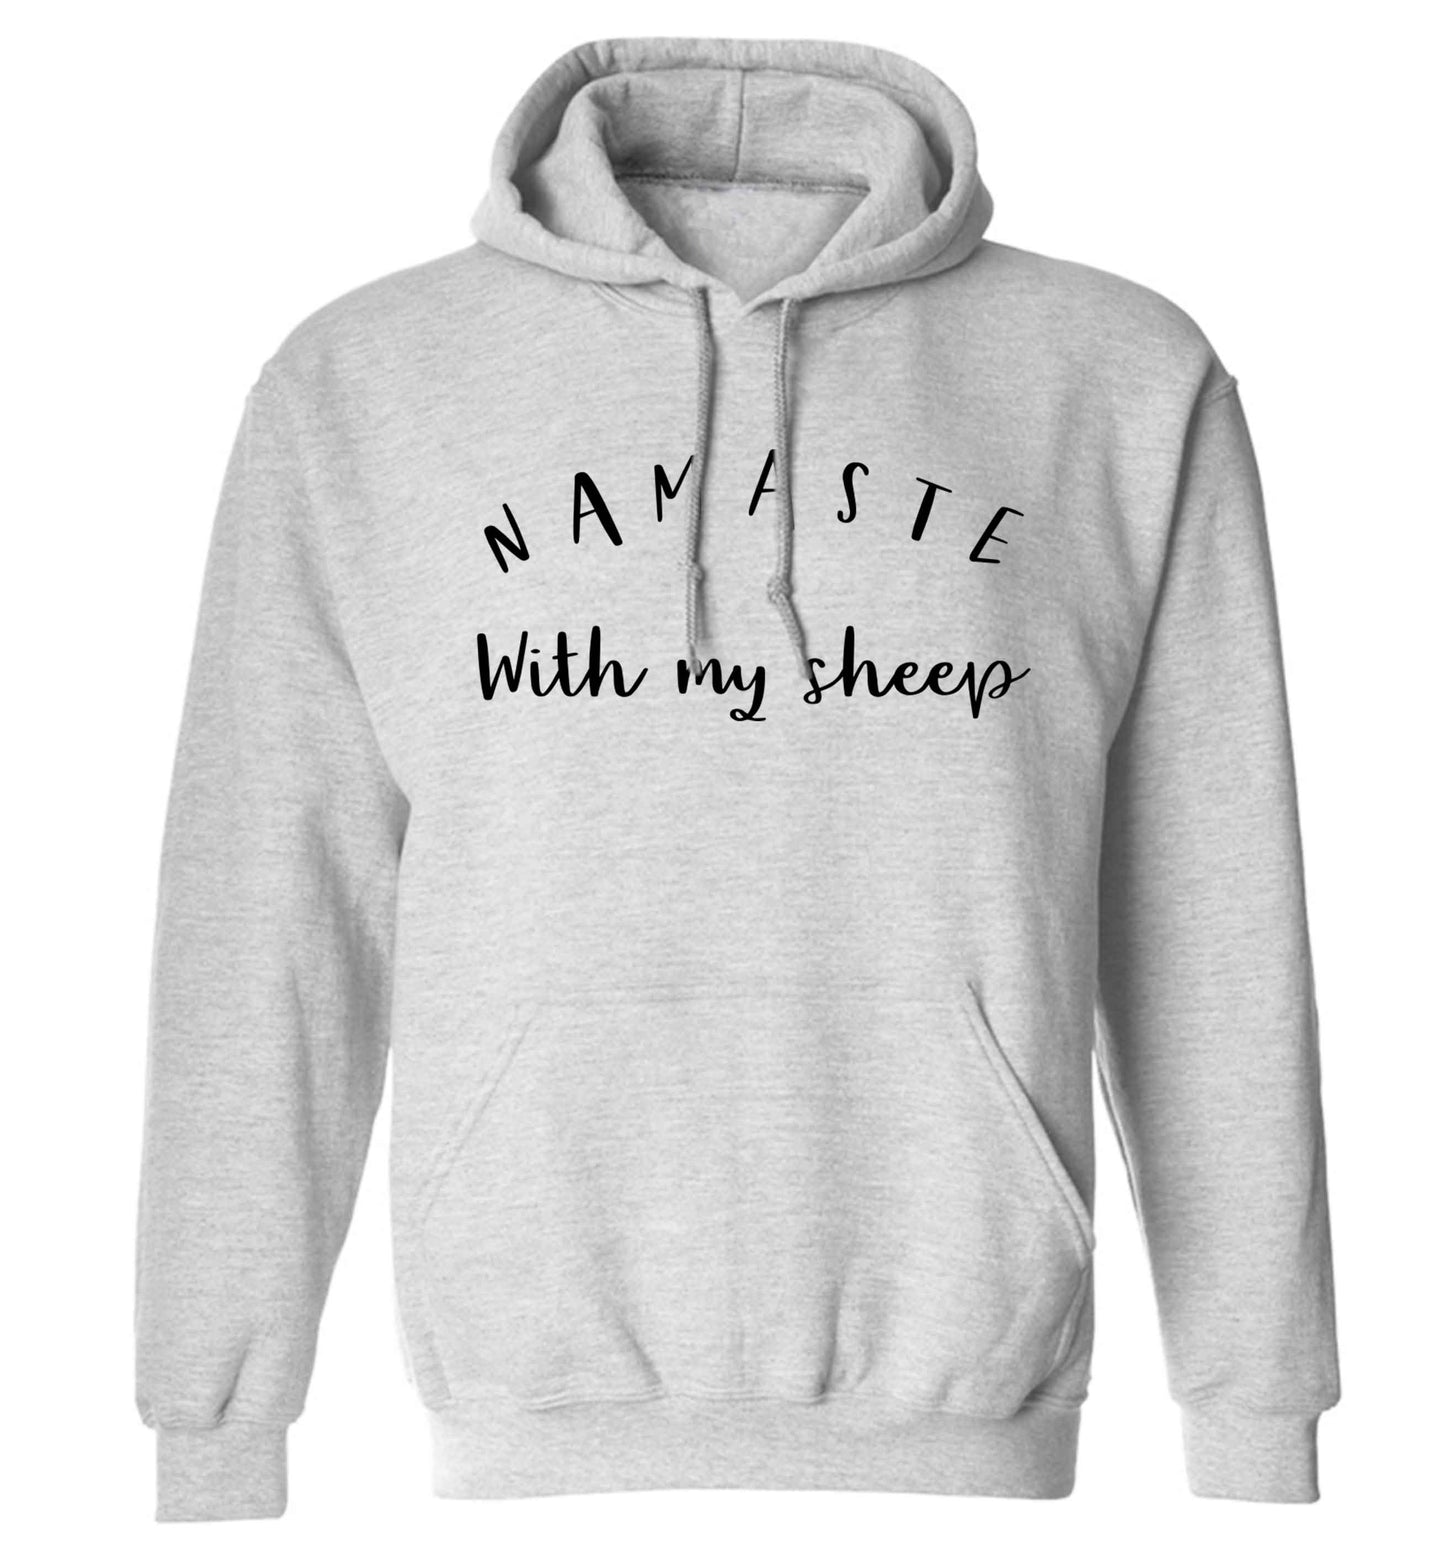 Namaste with my sheep adults unisex grey hoodie 2XL